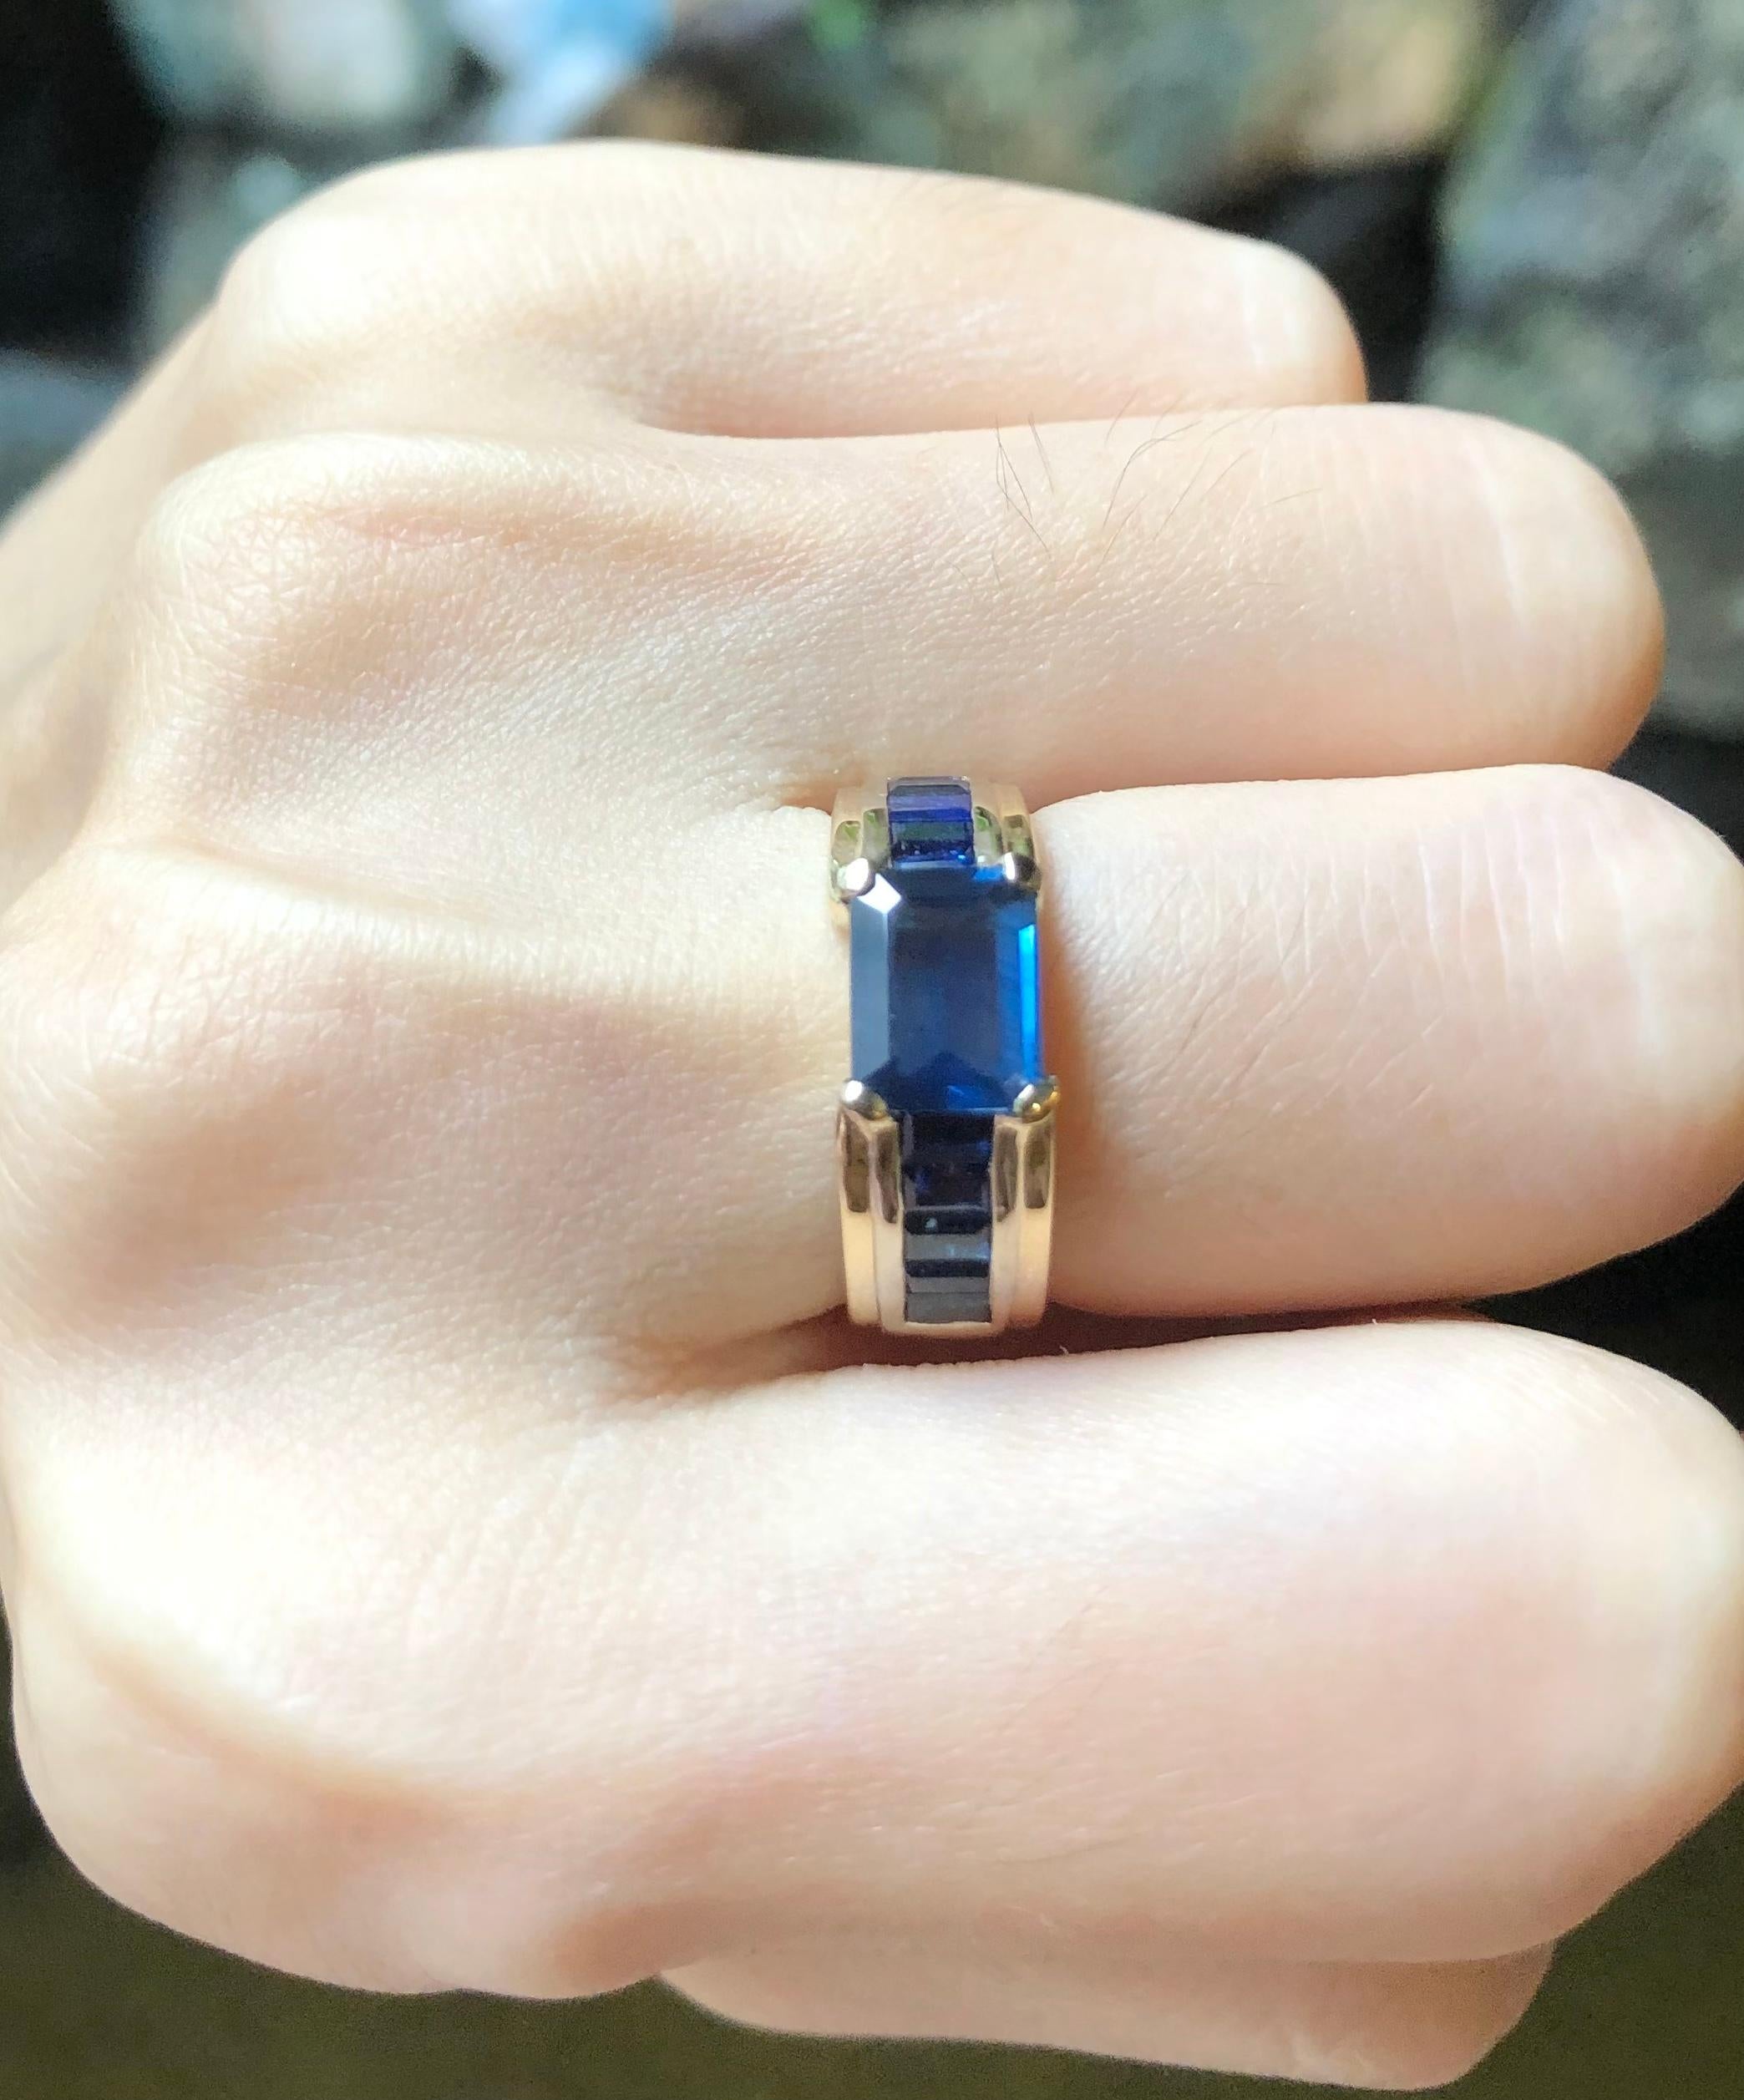 Blue Sapphire 1.29 carats with Blue Sapphire 1.20 carats Ring set in 18 Karat Gold Settings

Width:  0.8 cm 
Length: 0.7 cm
Ring Size: 50
Total Weight: 6.86 grams

